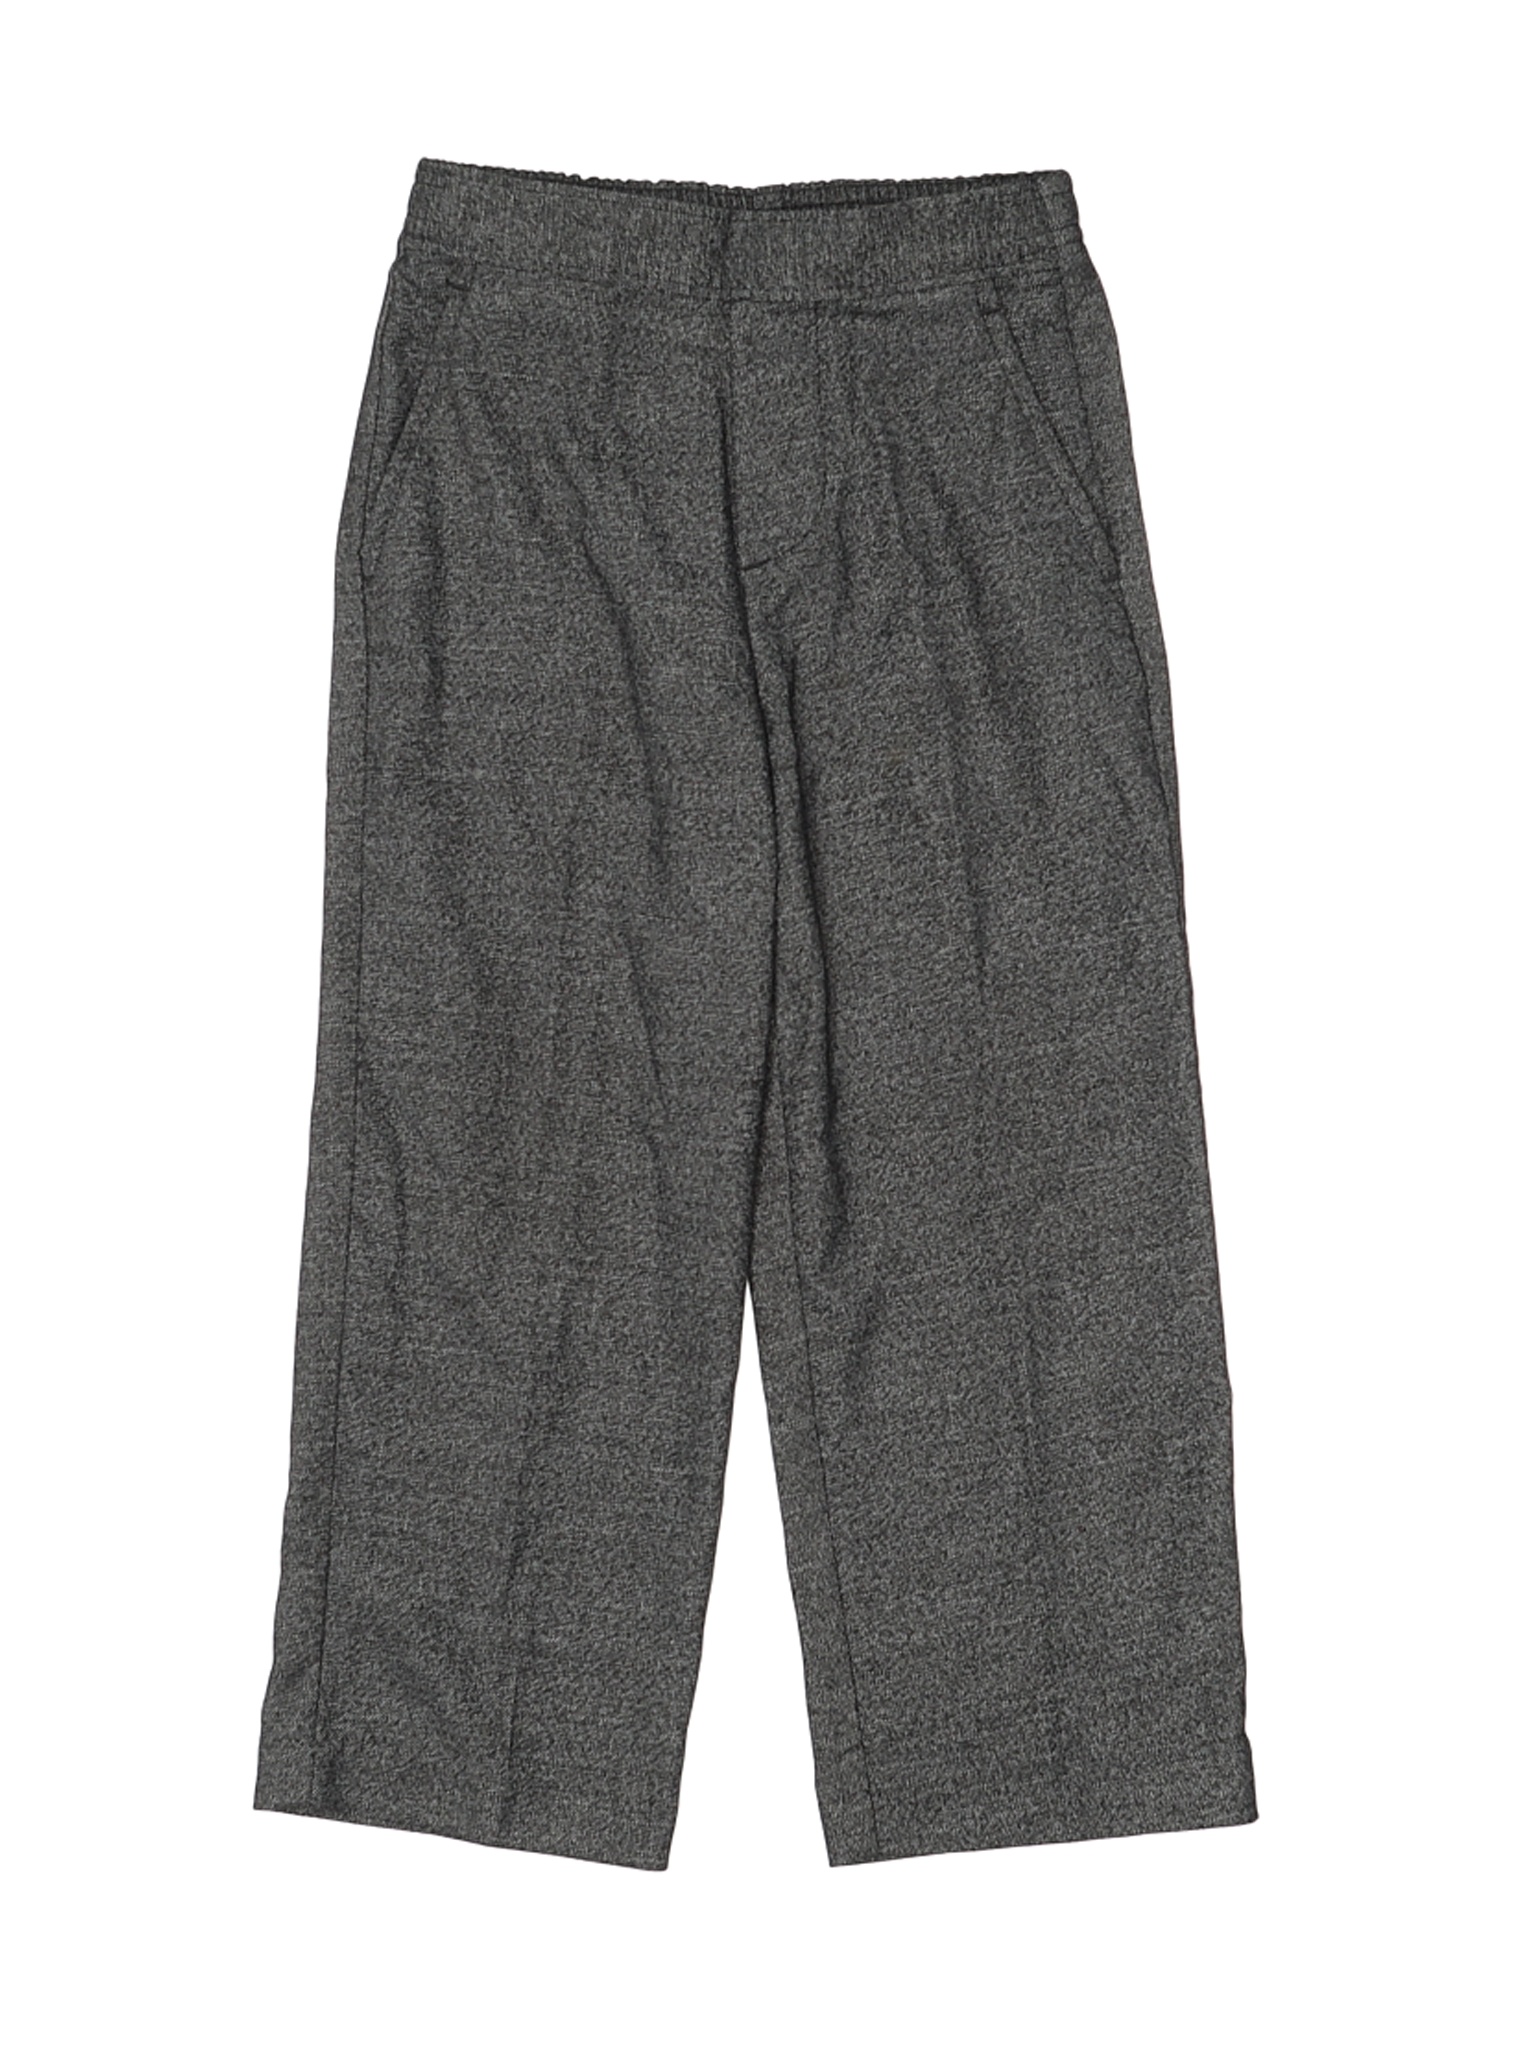 Assorted Brands Boys Gray Dress Pants 4 | eBay